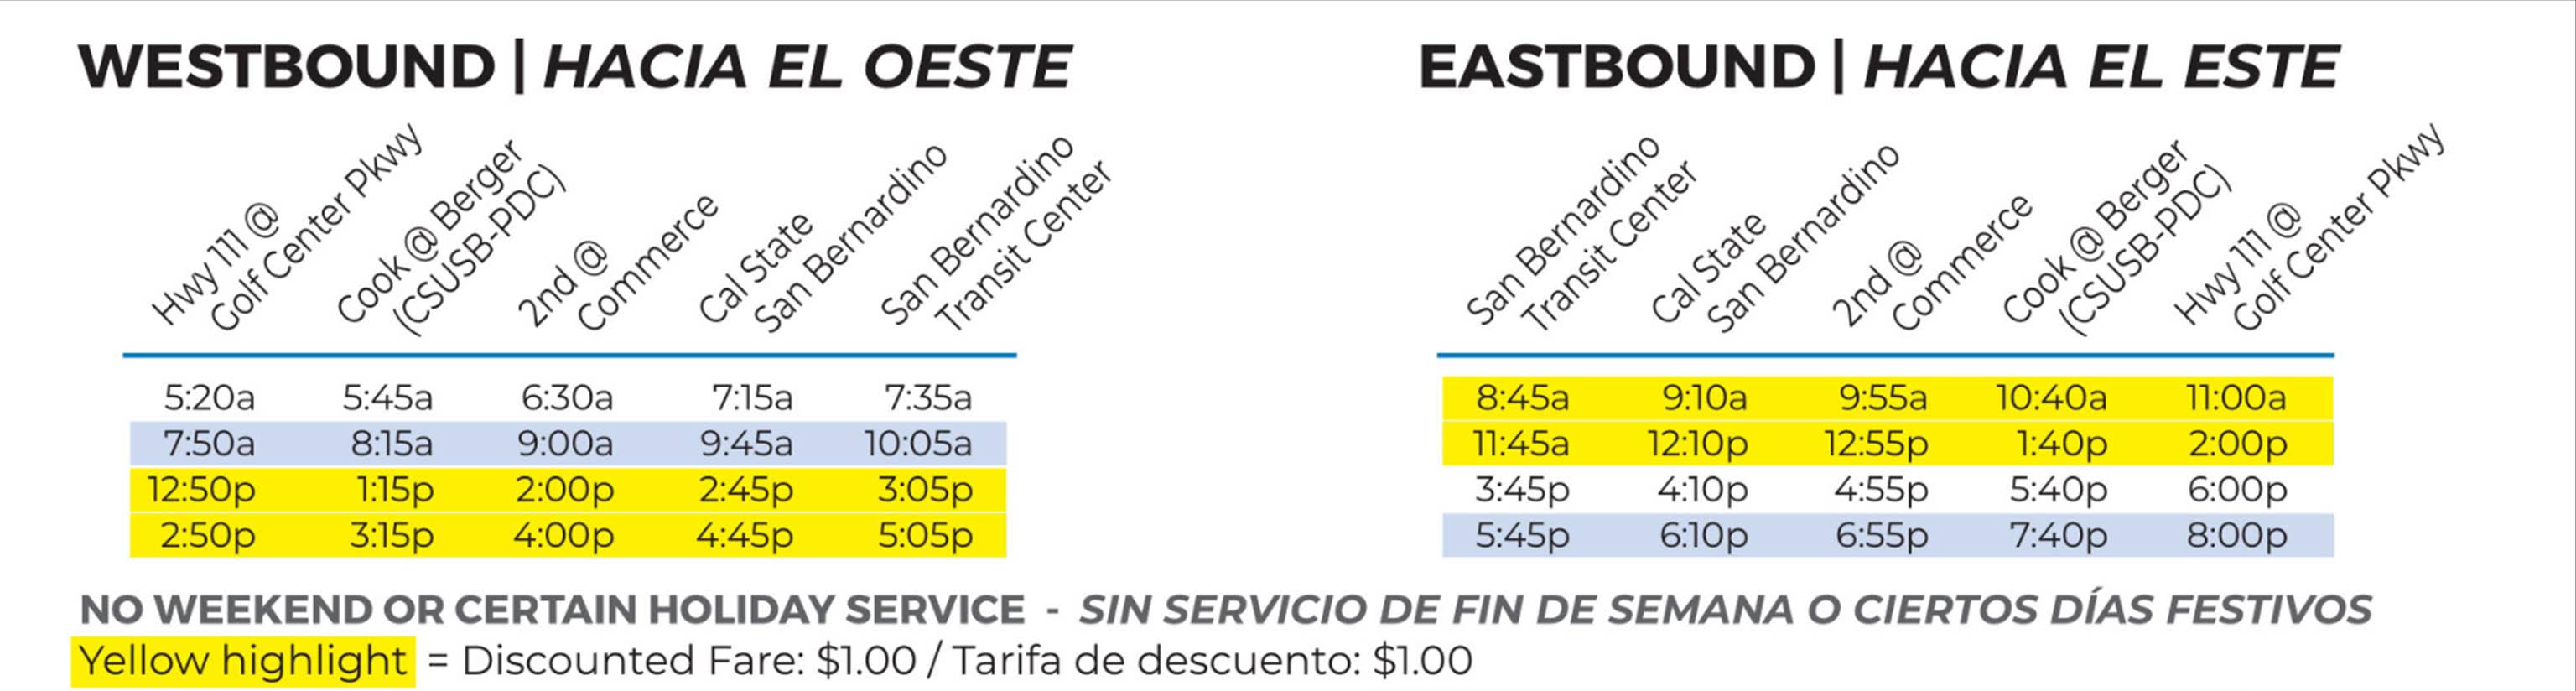 Westbound and Eastbound Schedule